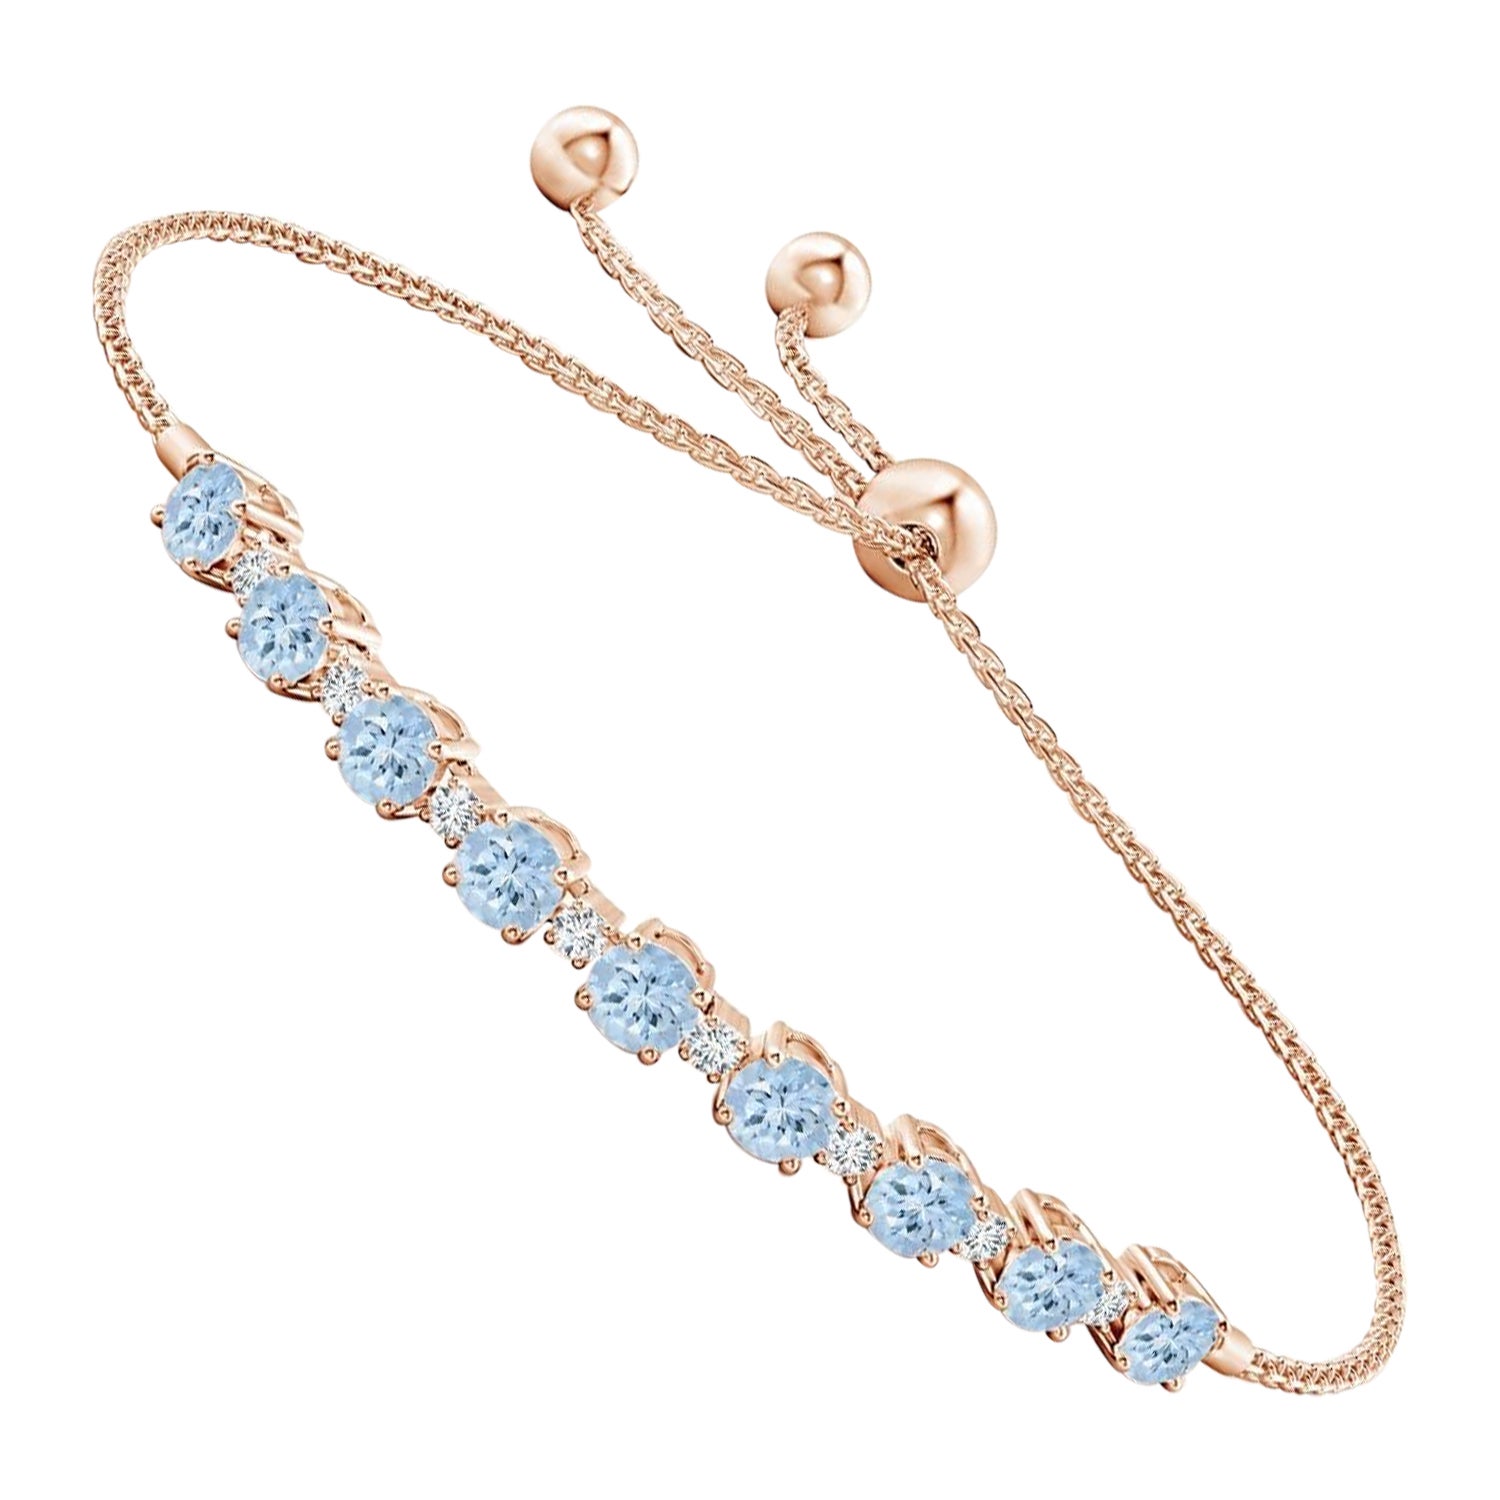 Natural 1.8ct Aquamarine and Diamond Tennis Bracelet in 14K Rose Gold For Sale